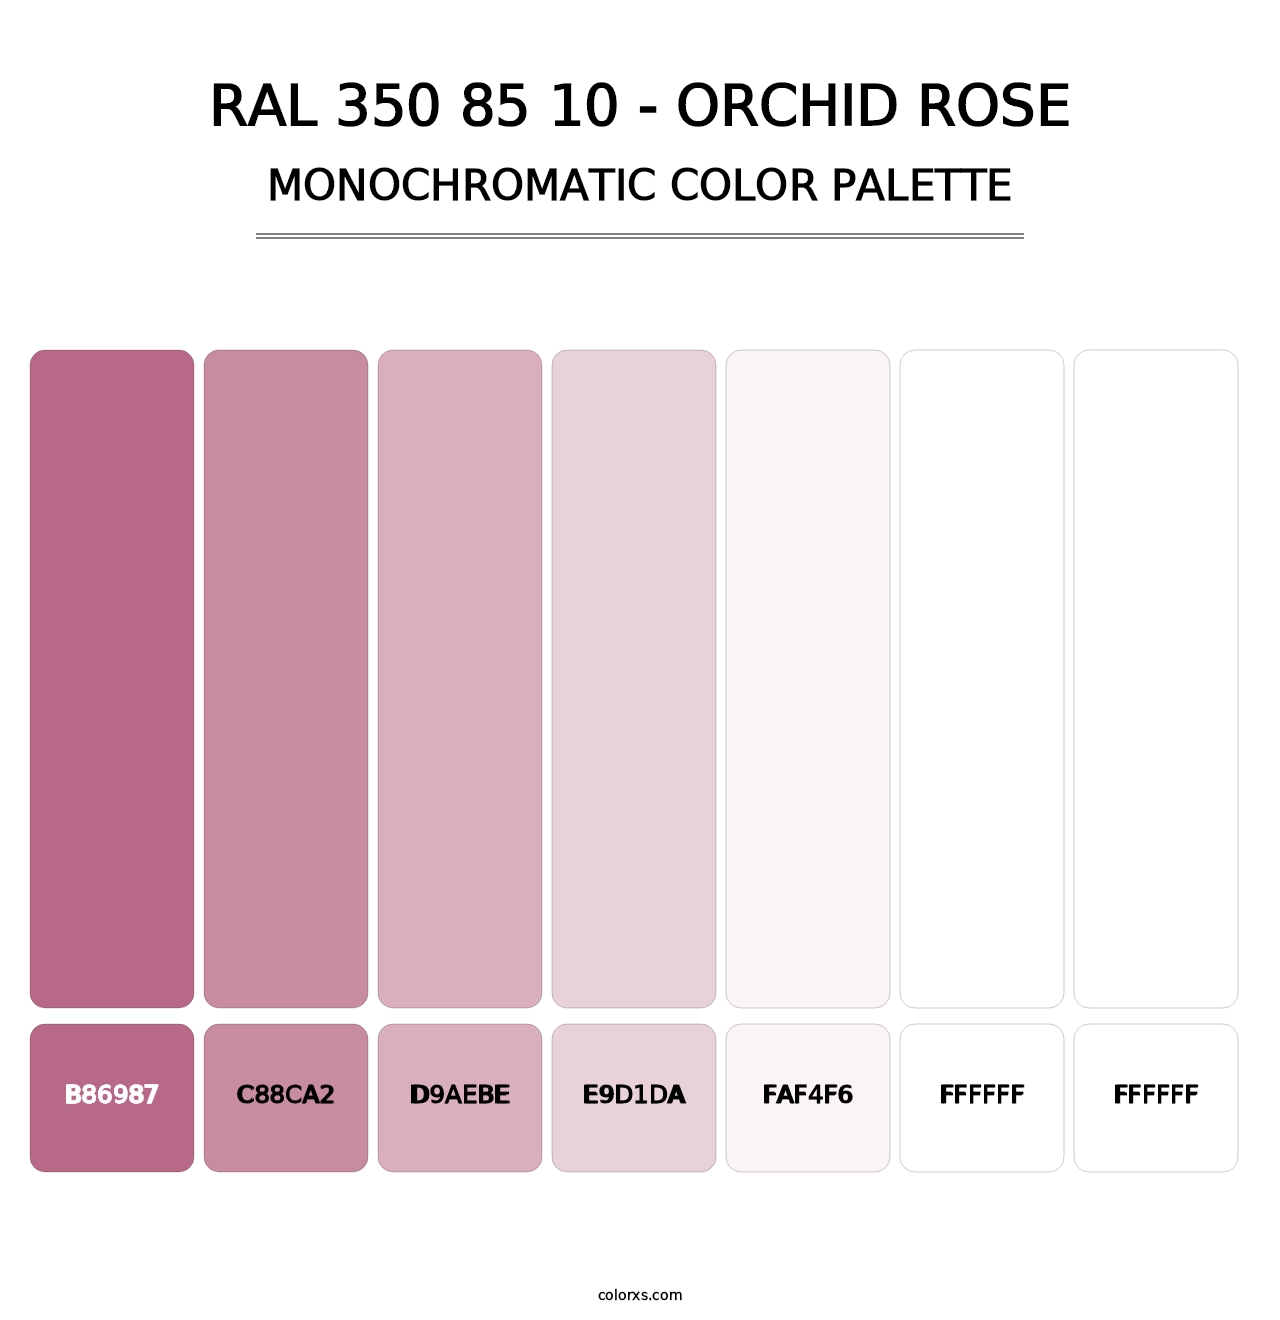 RAL 350 85 10 - Orchid Rose - Monochromatic Color Palette